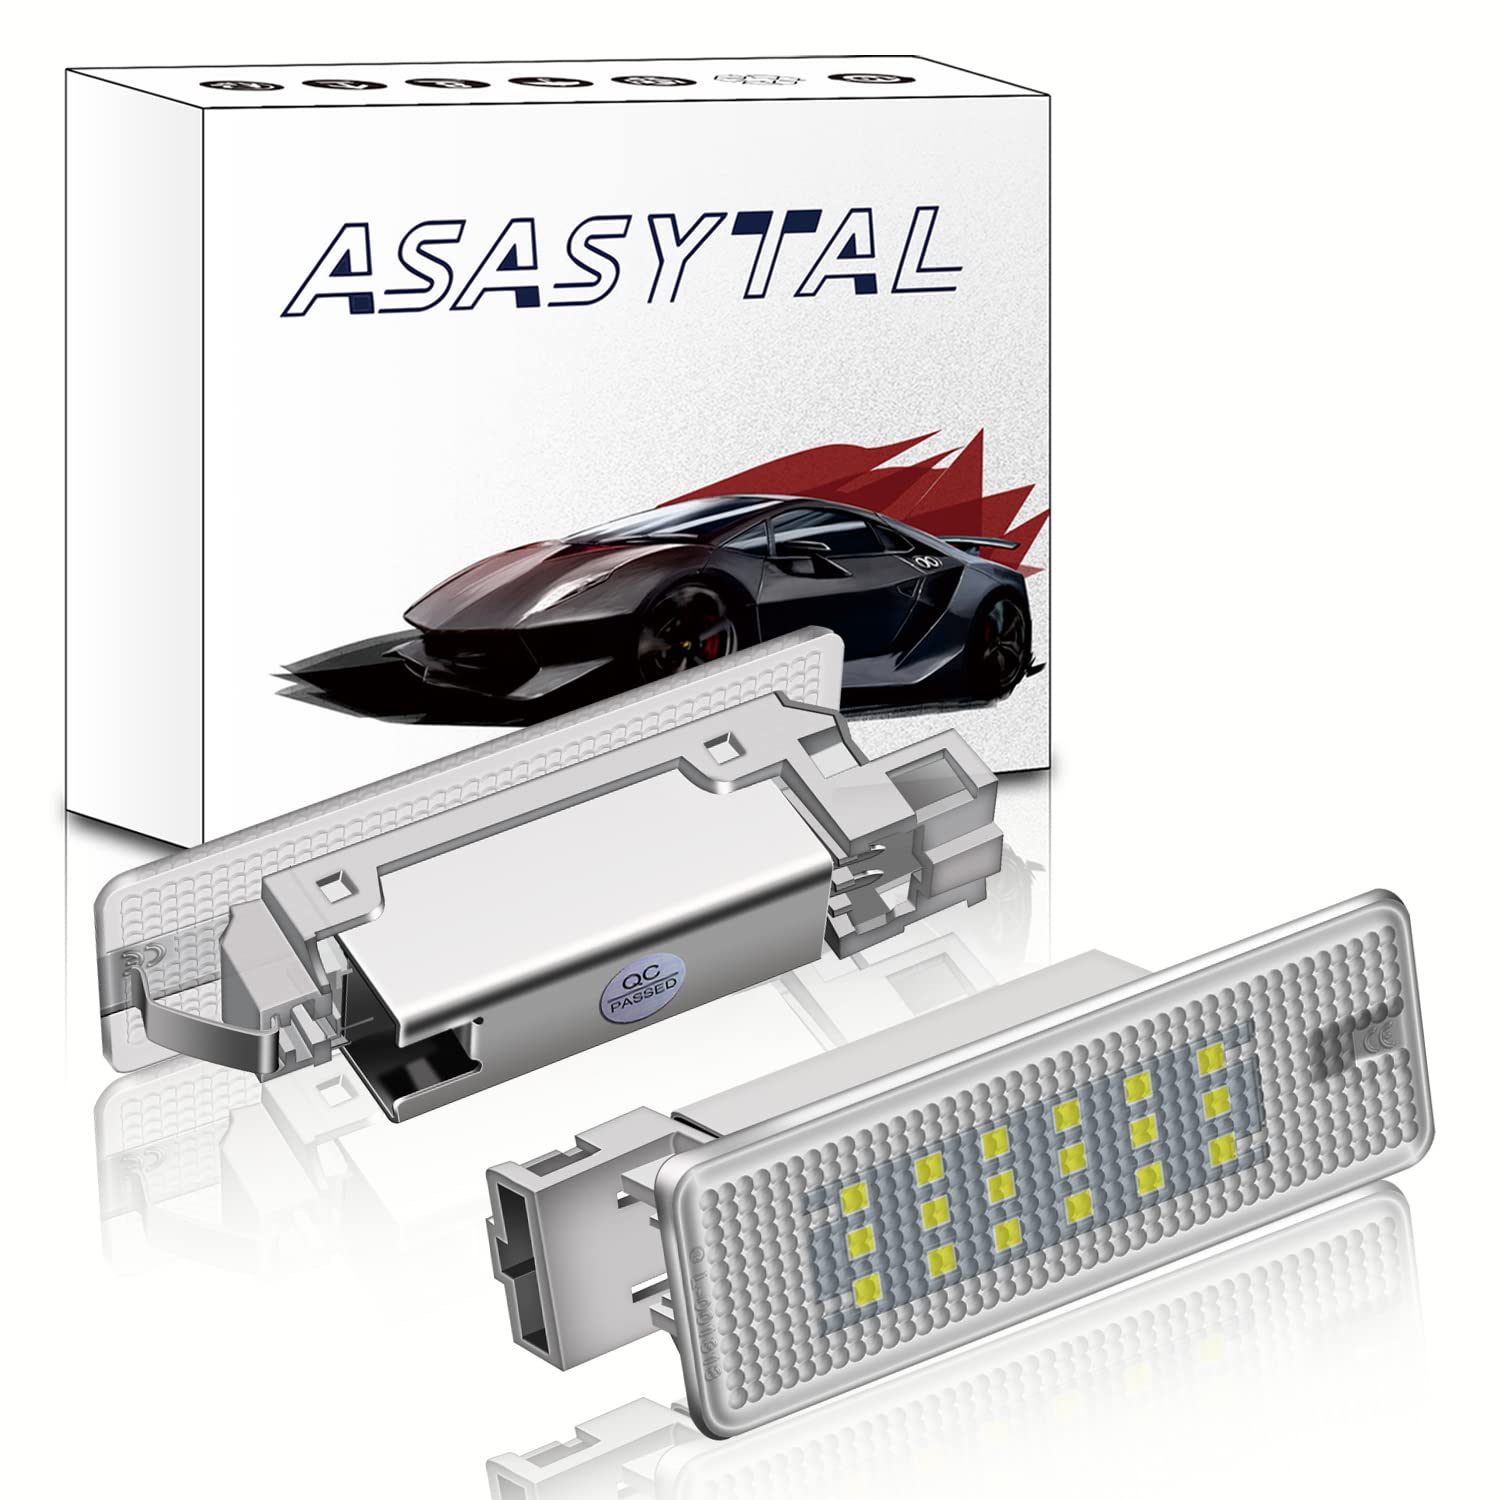 Asasytal SMD Fußraumbeleuchtung Auto Kofferraum/Türbeleuchtung Handschuhfachbirne Kompatibel mit VW Golf MK5/6/7 Pas-sat B6/7/8 CC S-cirocco T-iguan Tou-ran Tou-areg T5 ect, 2 Stücke von Asasytal